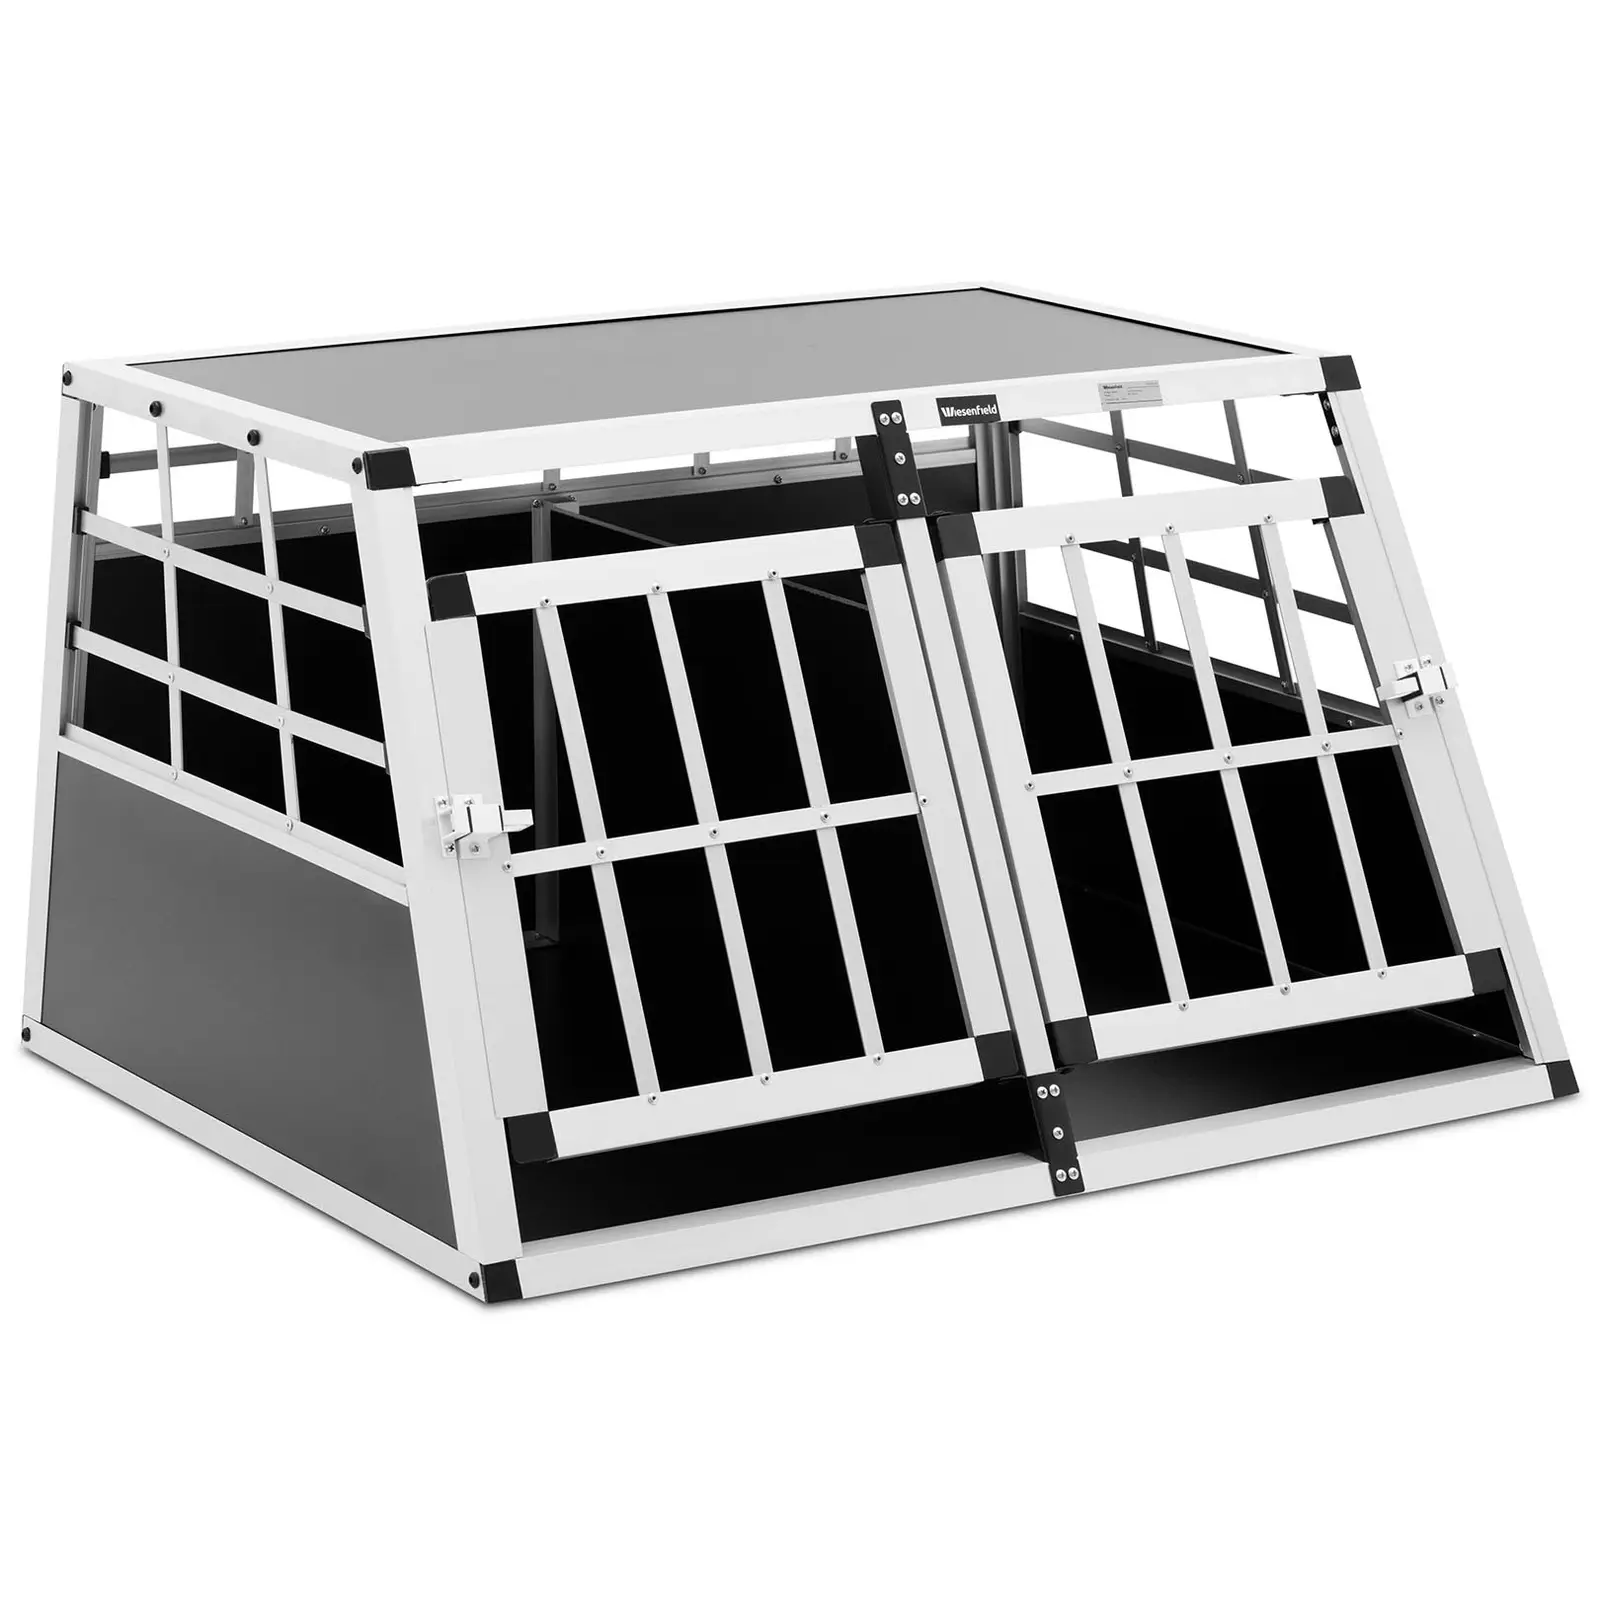 Hundebur - aluminium - trapesformet - 70 x 90 x 50 cm - med skillevegg